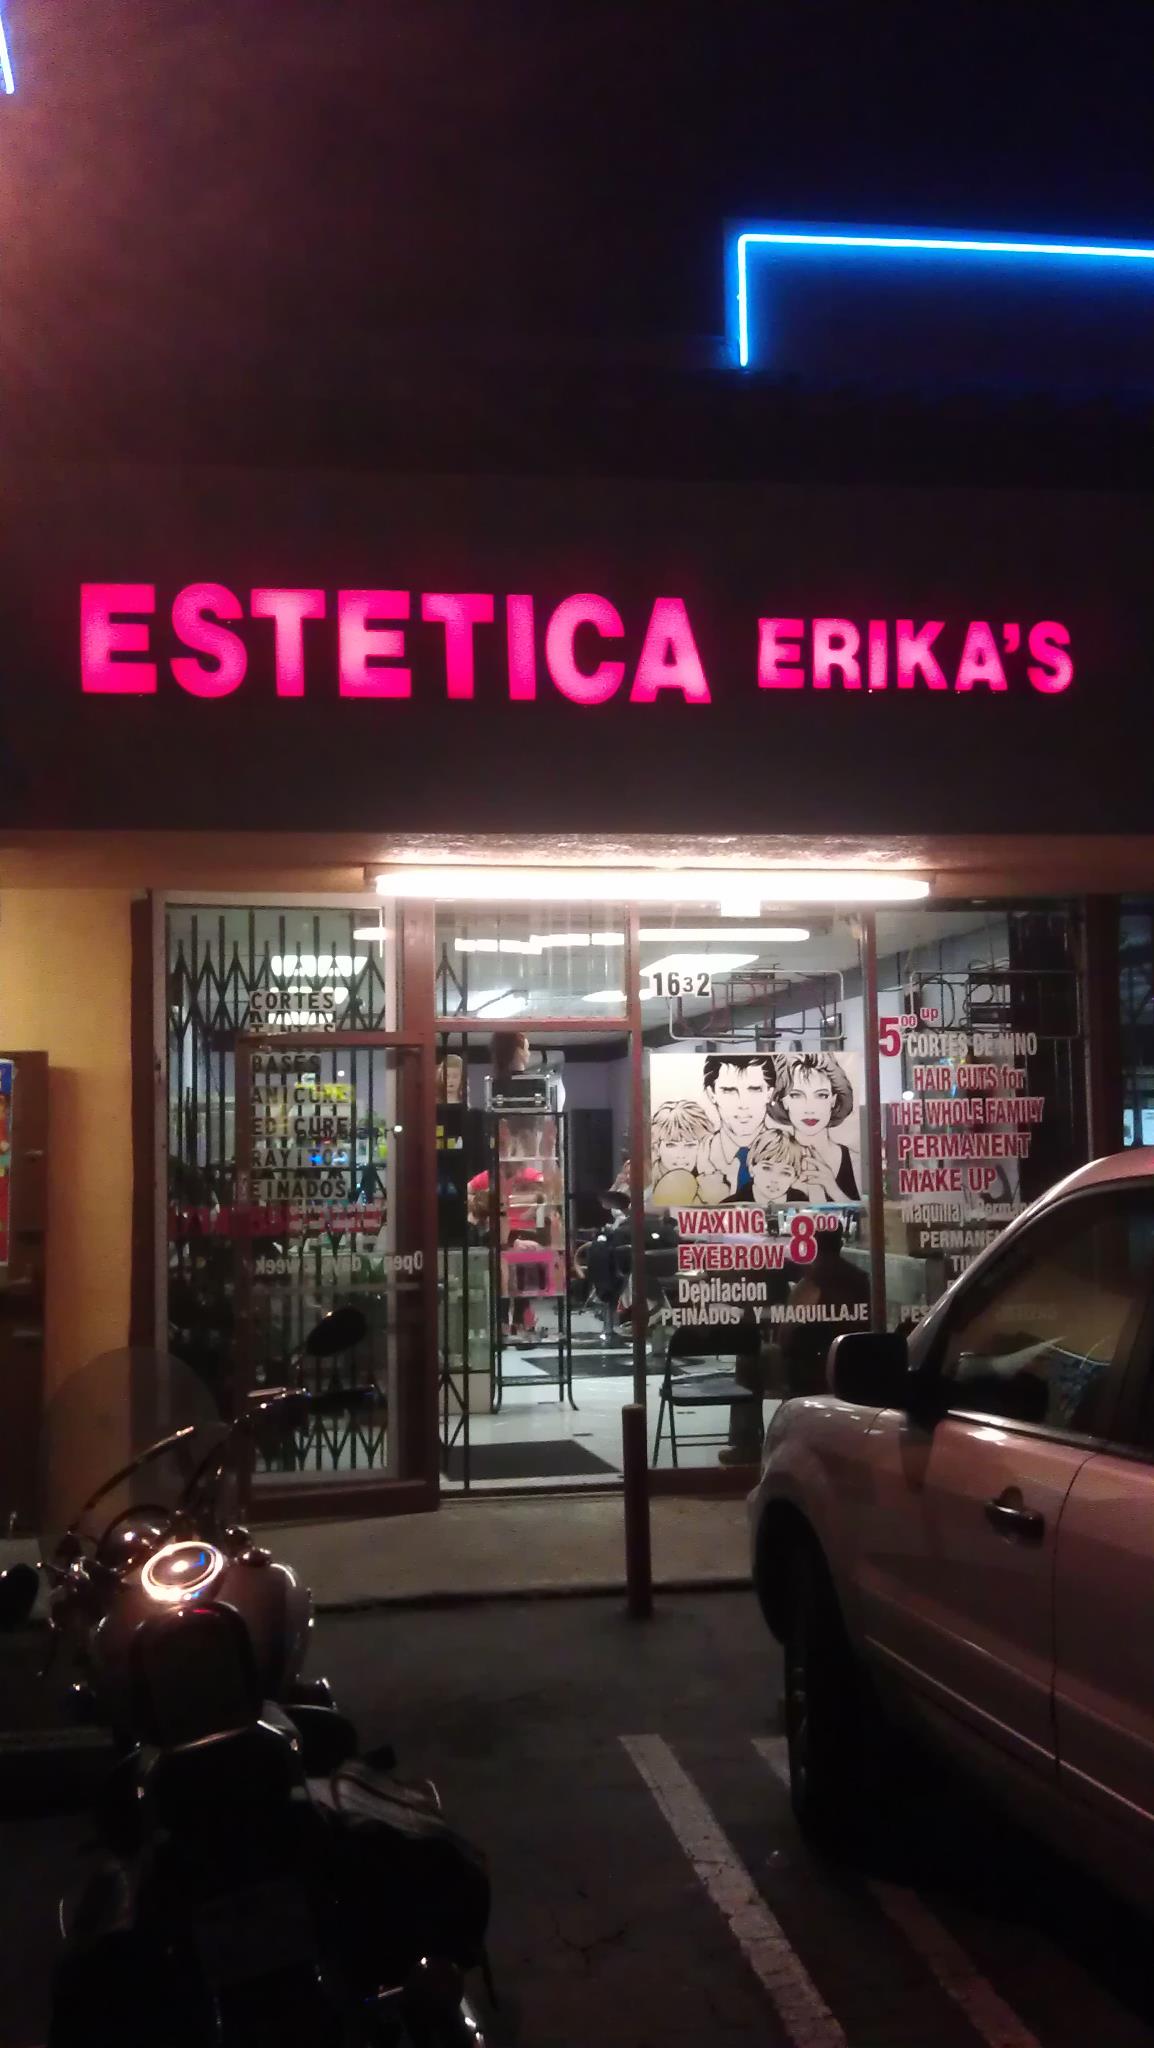 Estetica Erika's